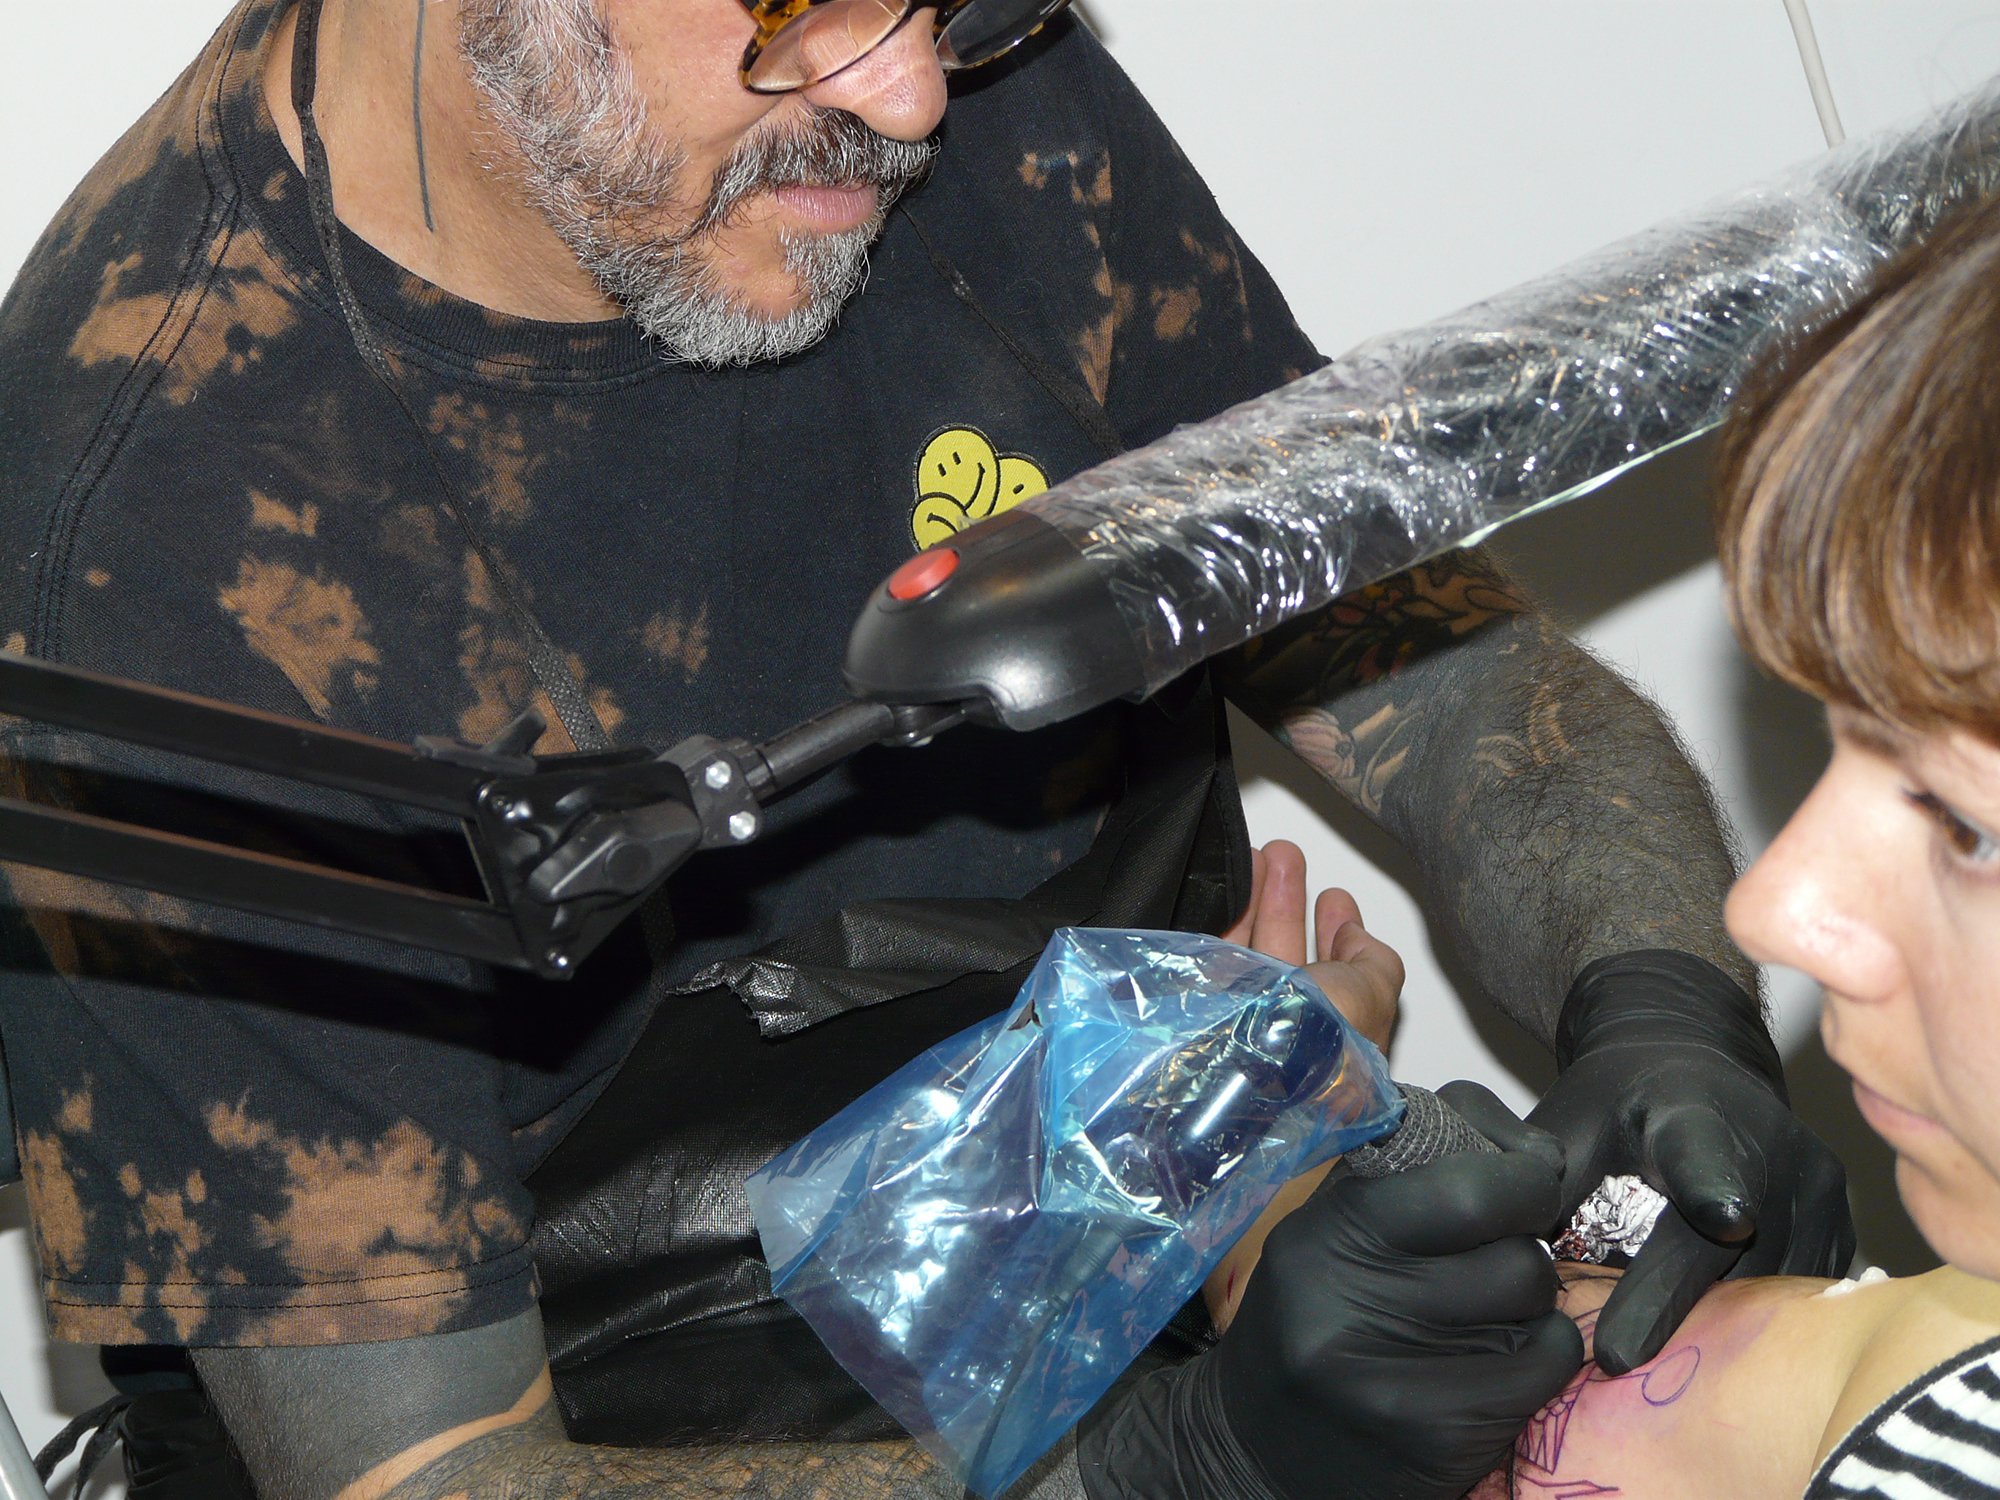 Noon tattoo artist working on a tattoo at the berlin tattoo convention